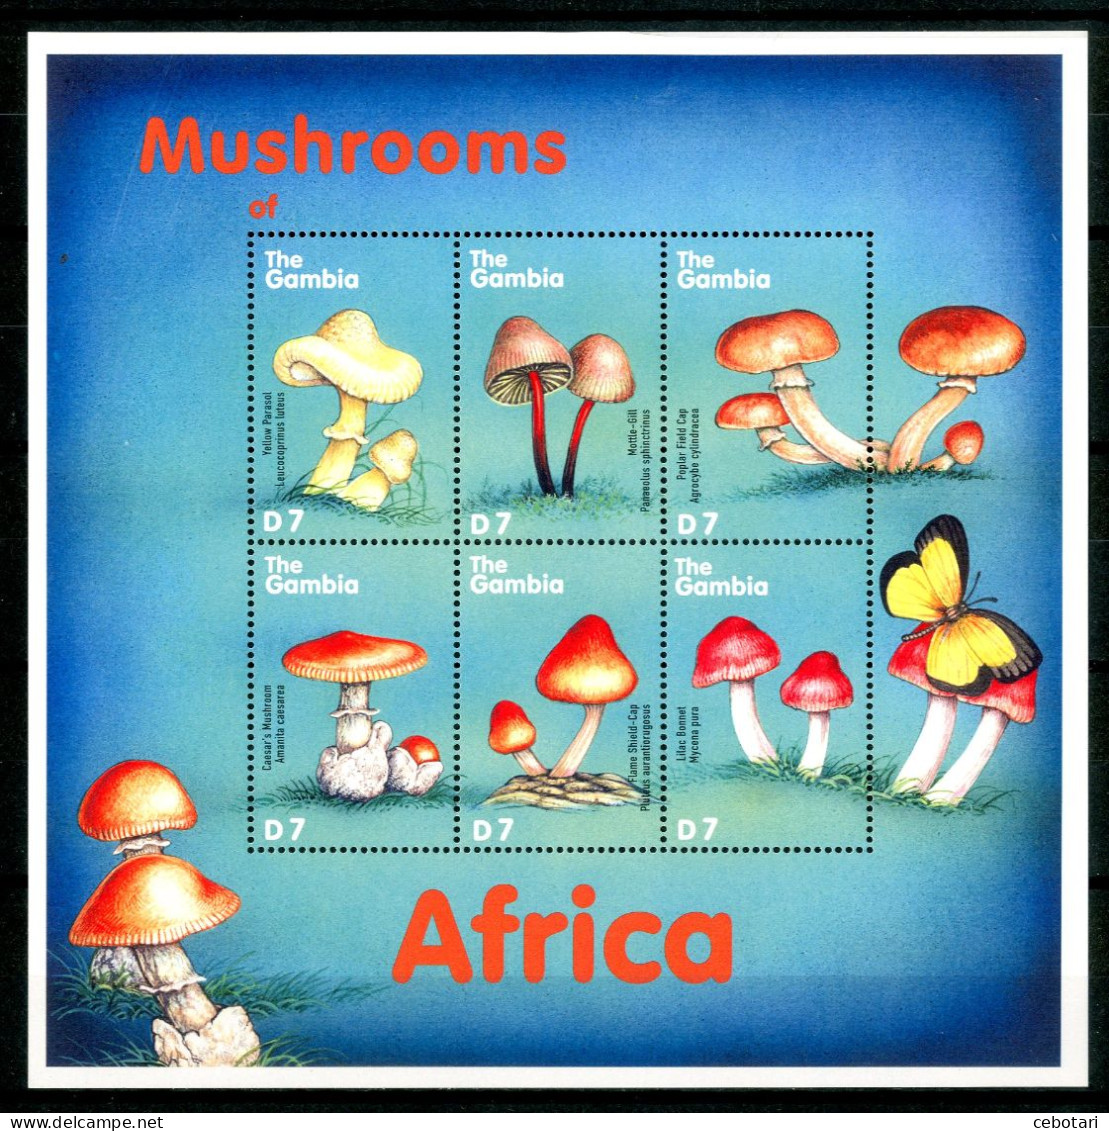 GAMBIA 2000** - Funghi / Mushrooms - Block Di 6 Val. MNH. - Hongos